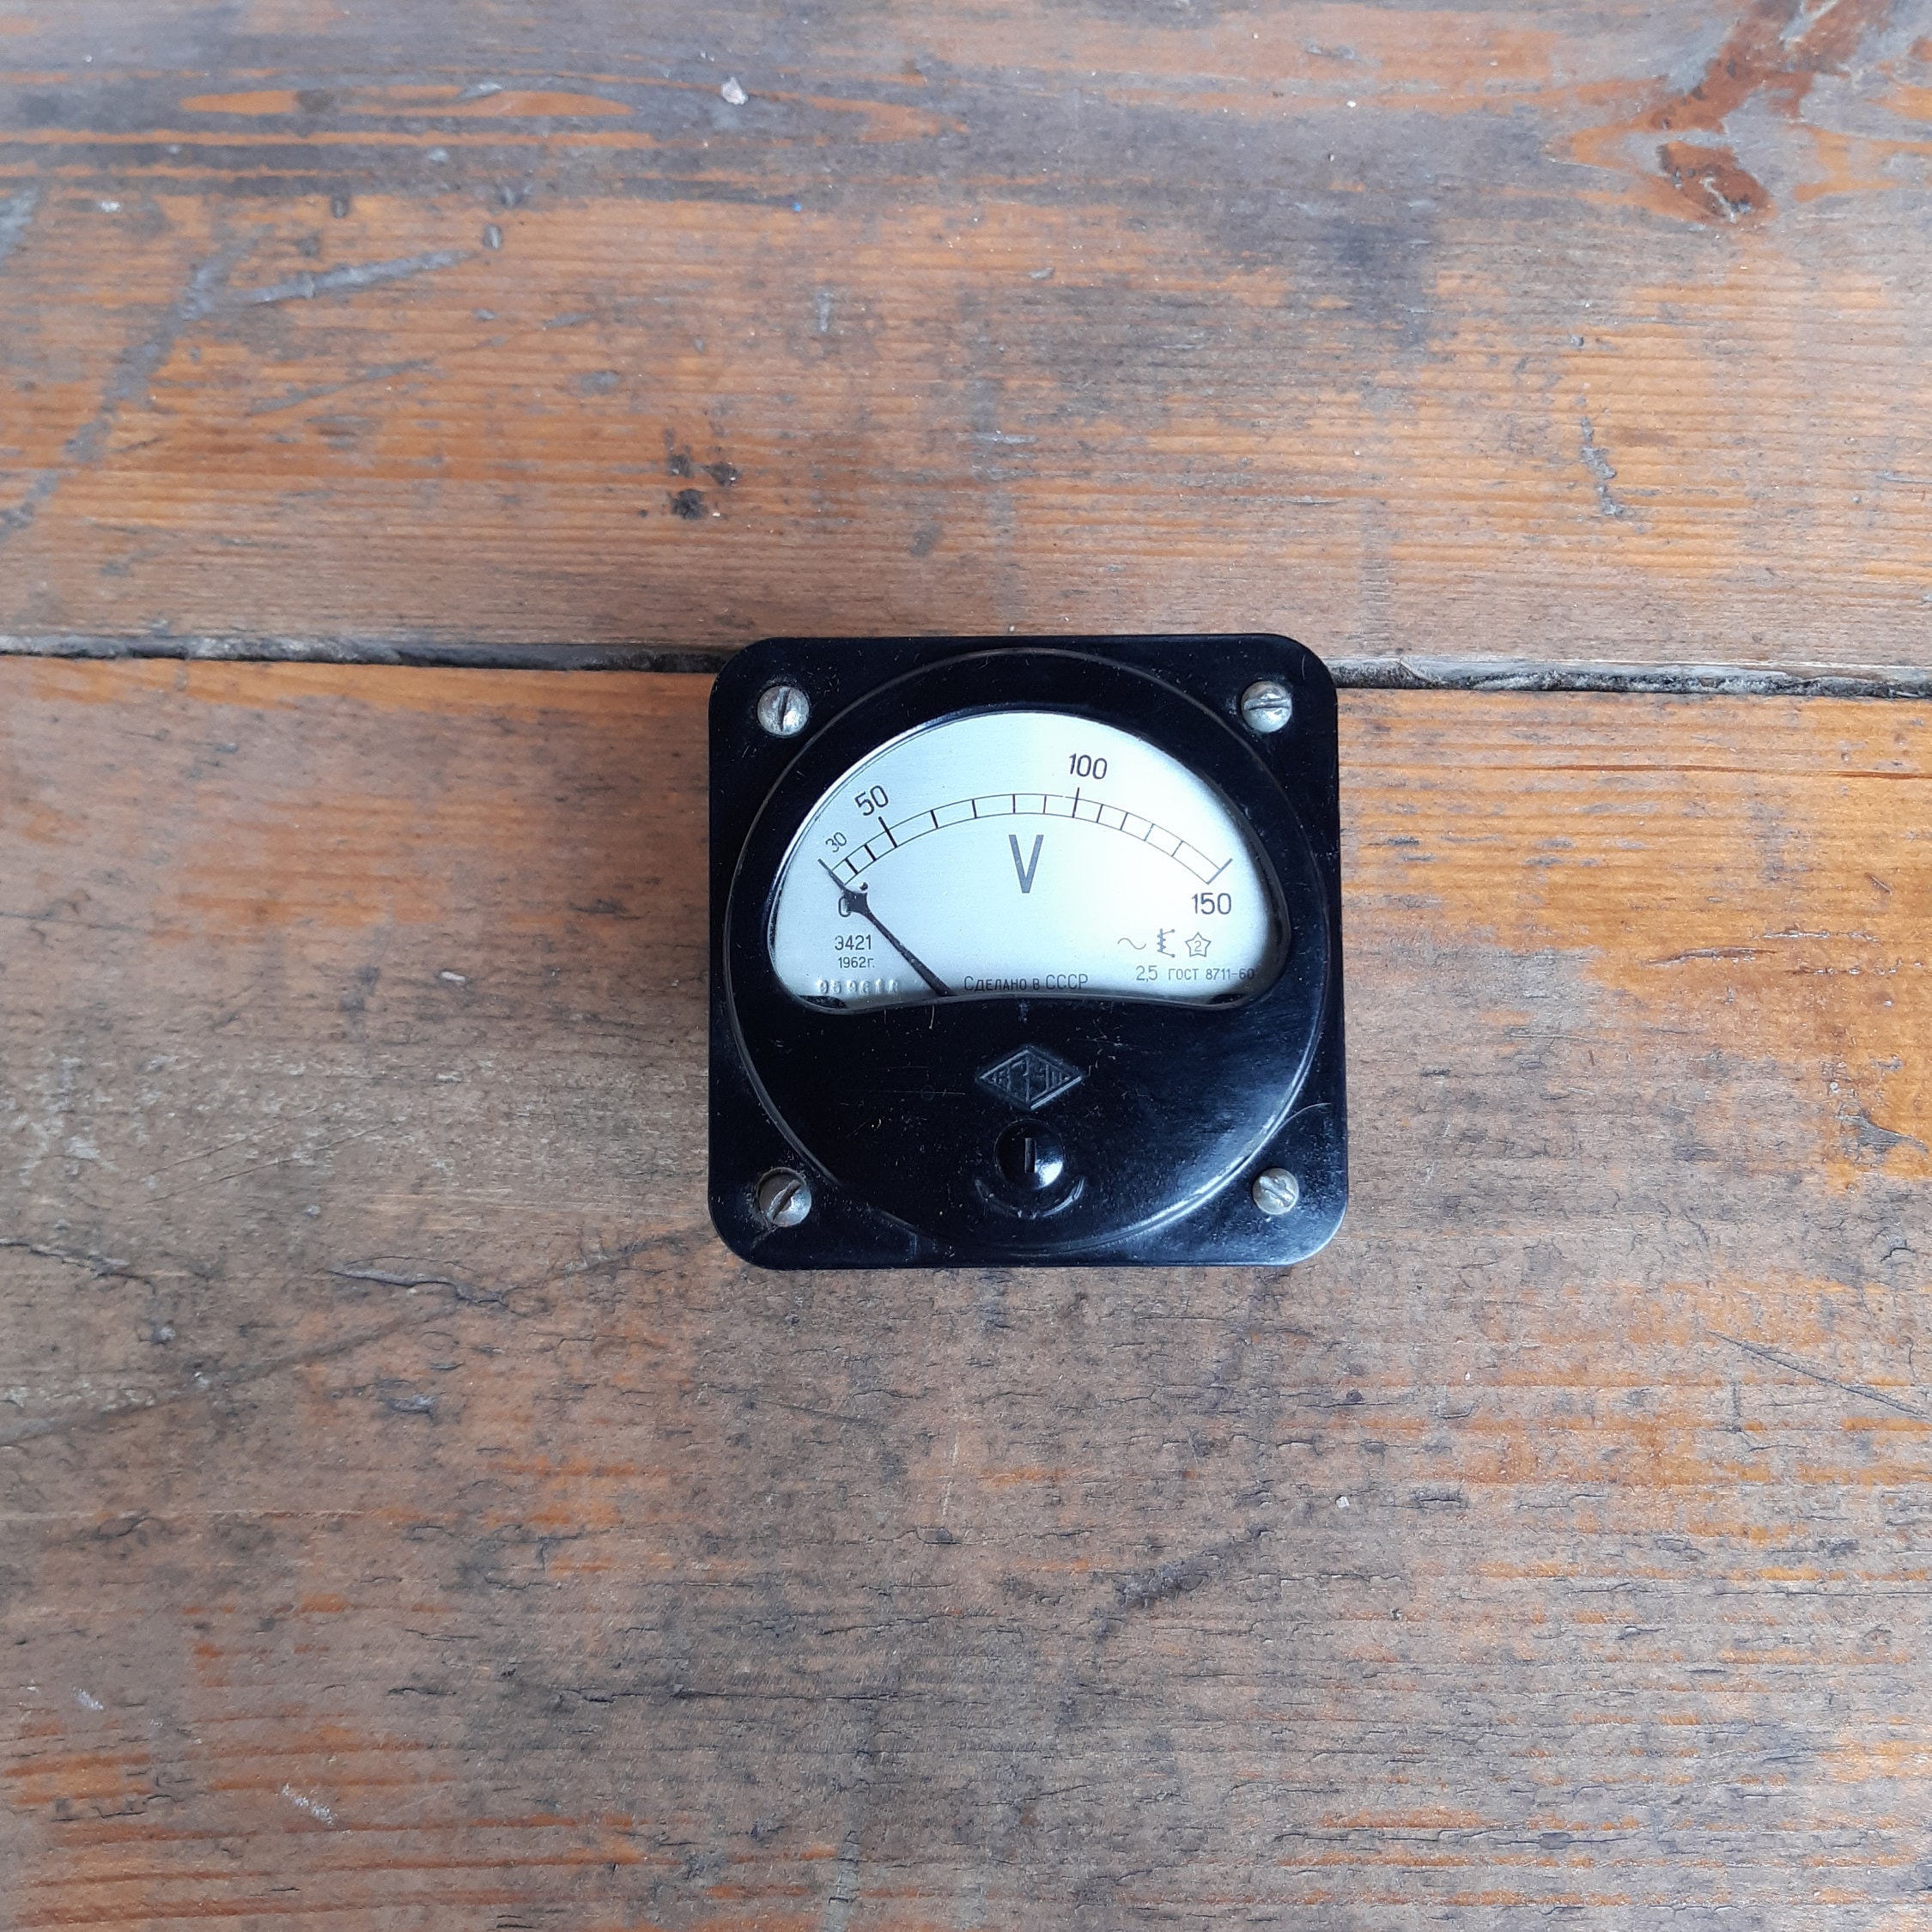 Analoges Voltmeter für Wechselstrom, Vintage Voltmeter, 0-150 V Skala  mechanisch, Messgerät, Vintage Elektronik, Industriedekor - .de